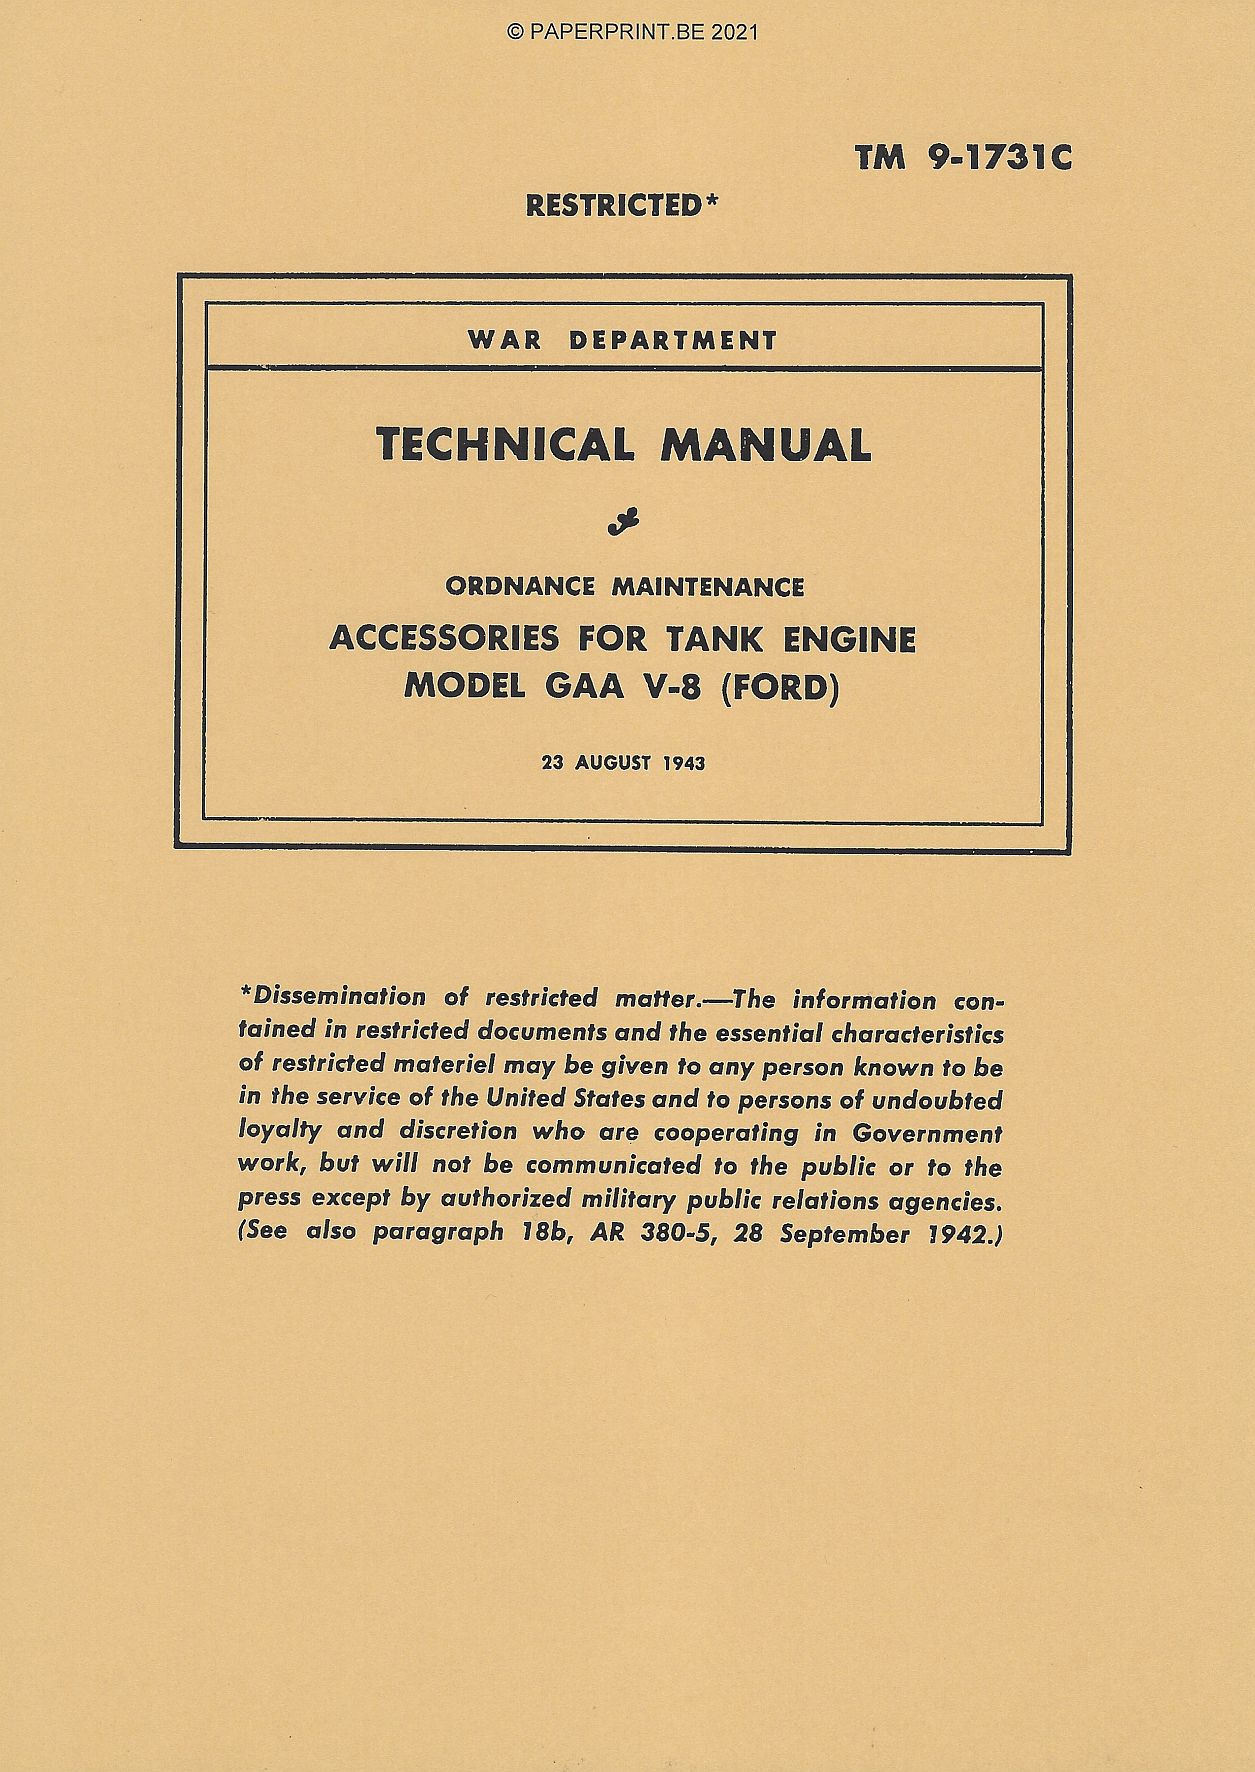 TM 9-1731C US ACCESSOIRIES FOR TANK ENGINE MODEL GAA V-8 (FORD)